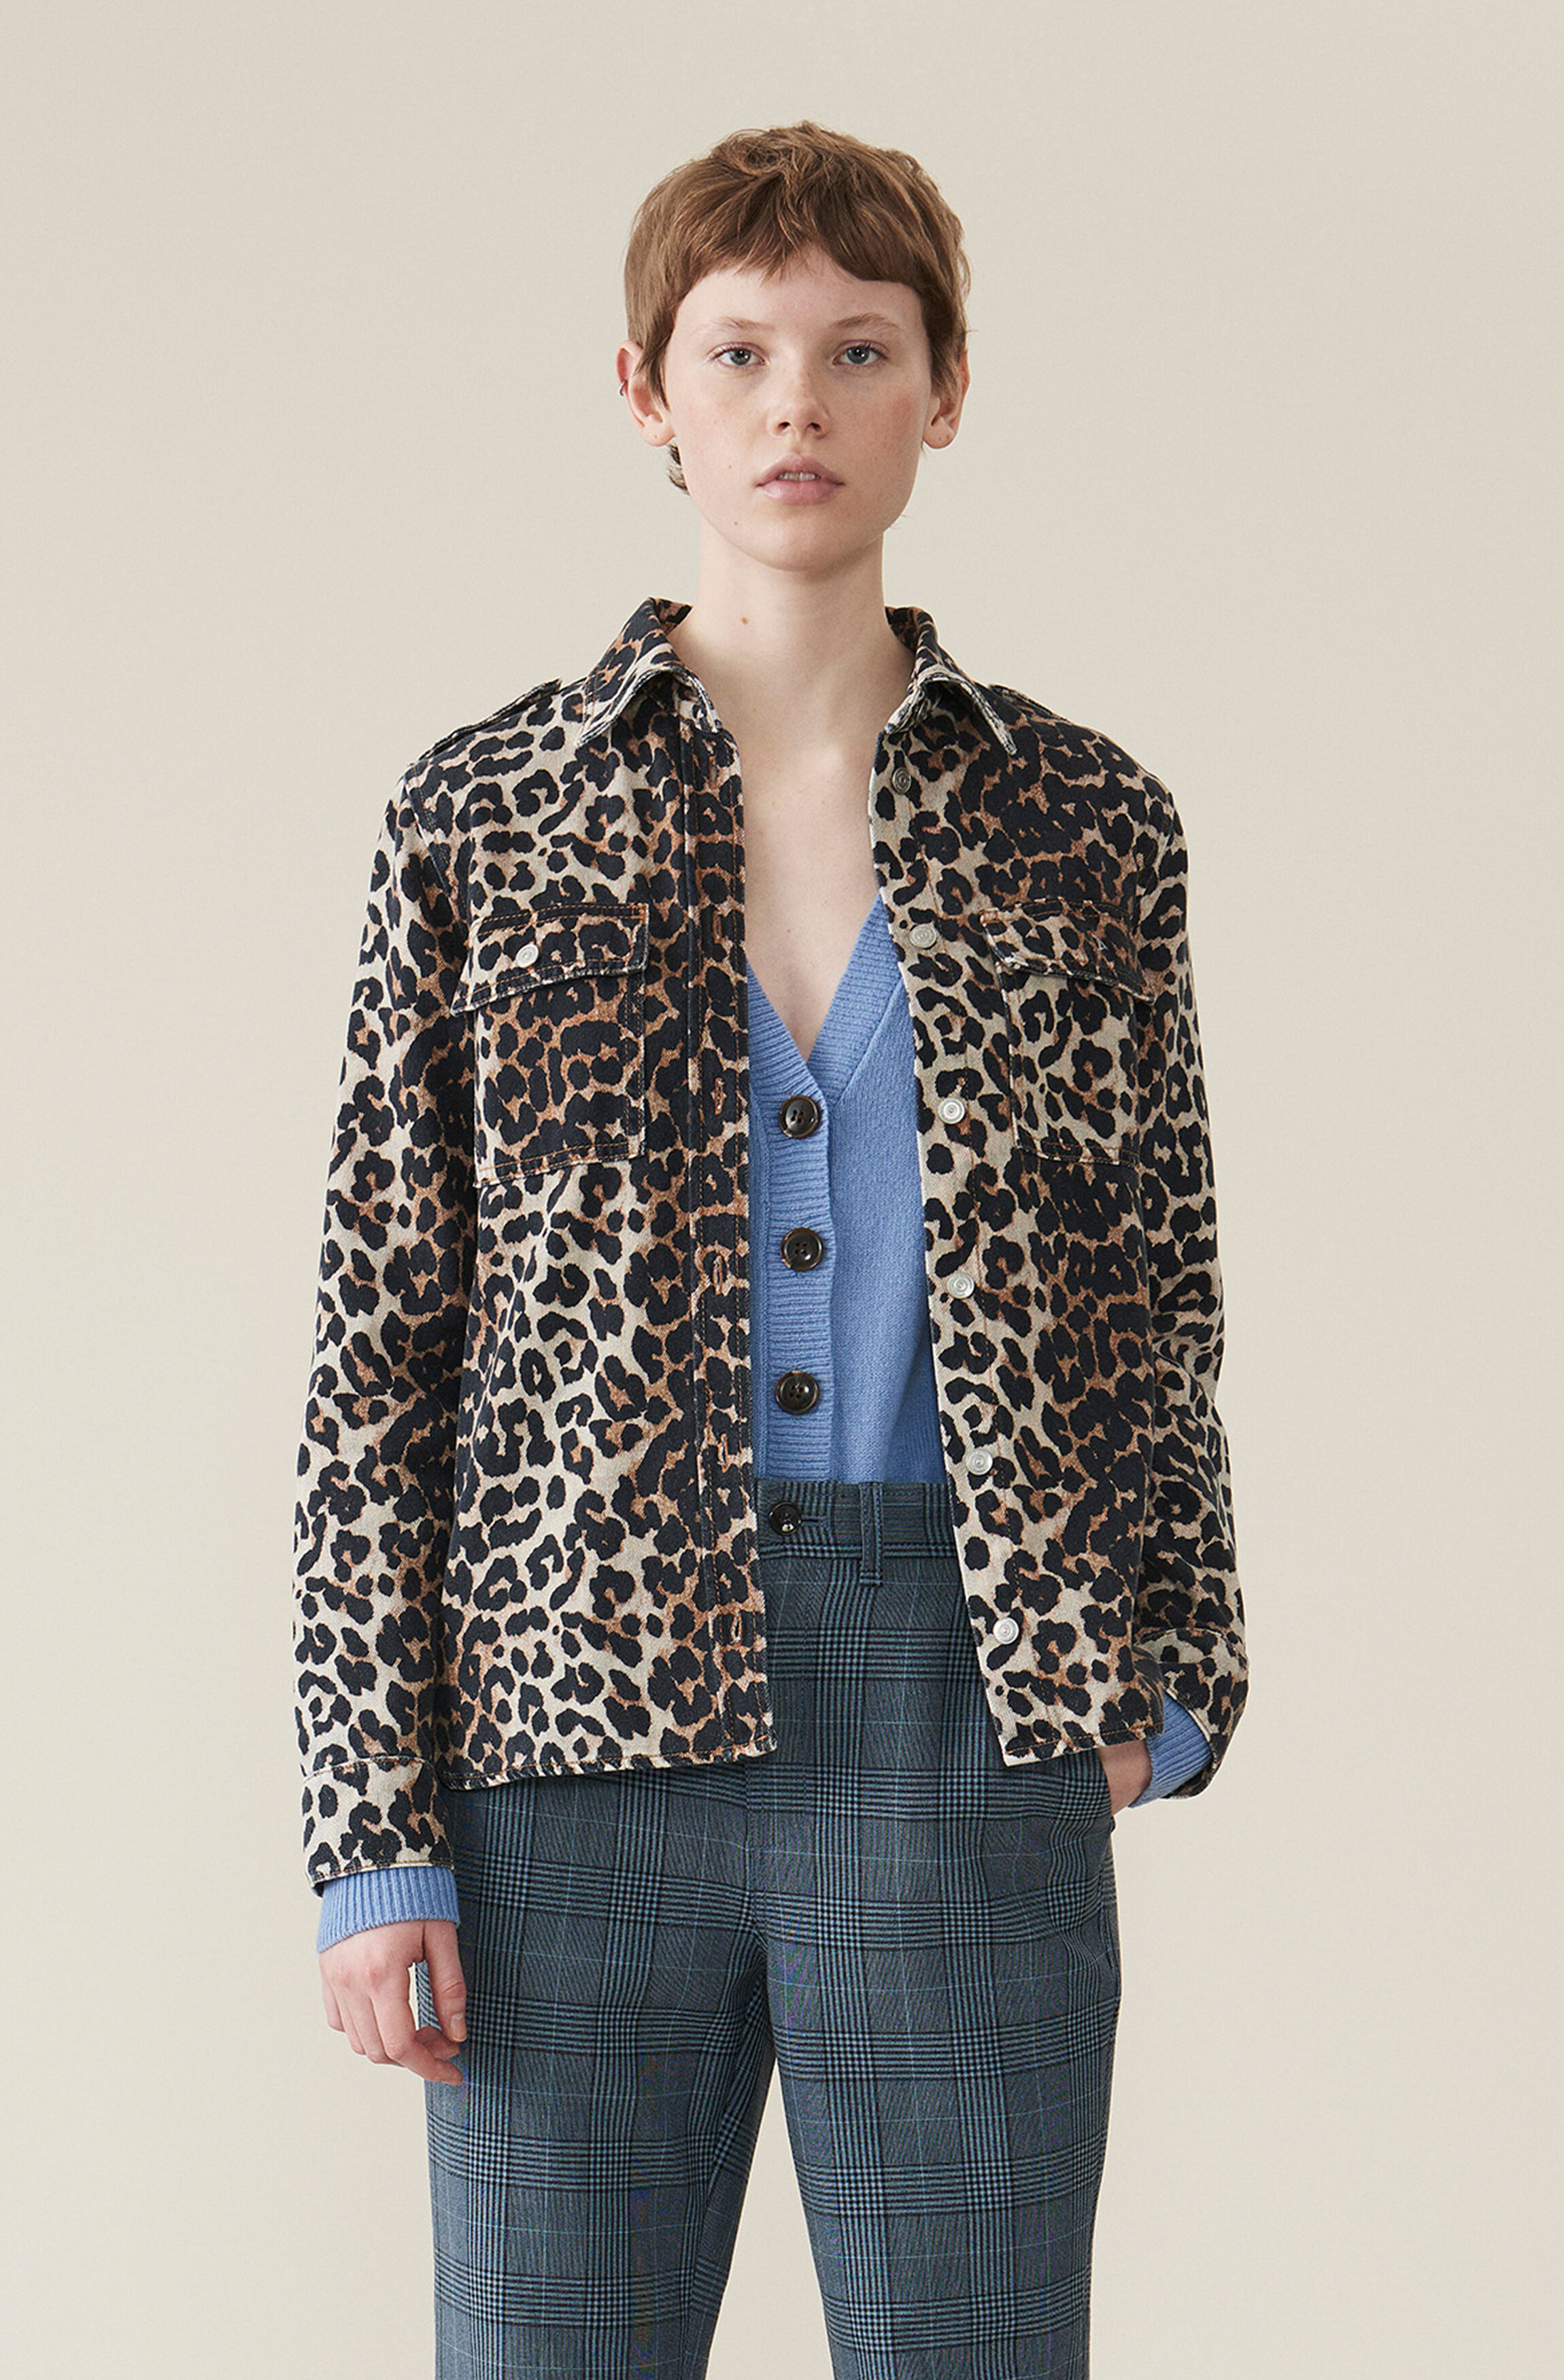 leopard print jeans australia